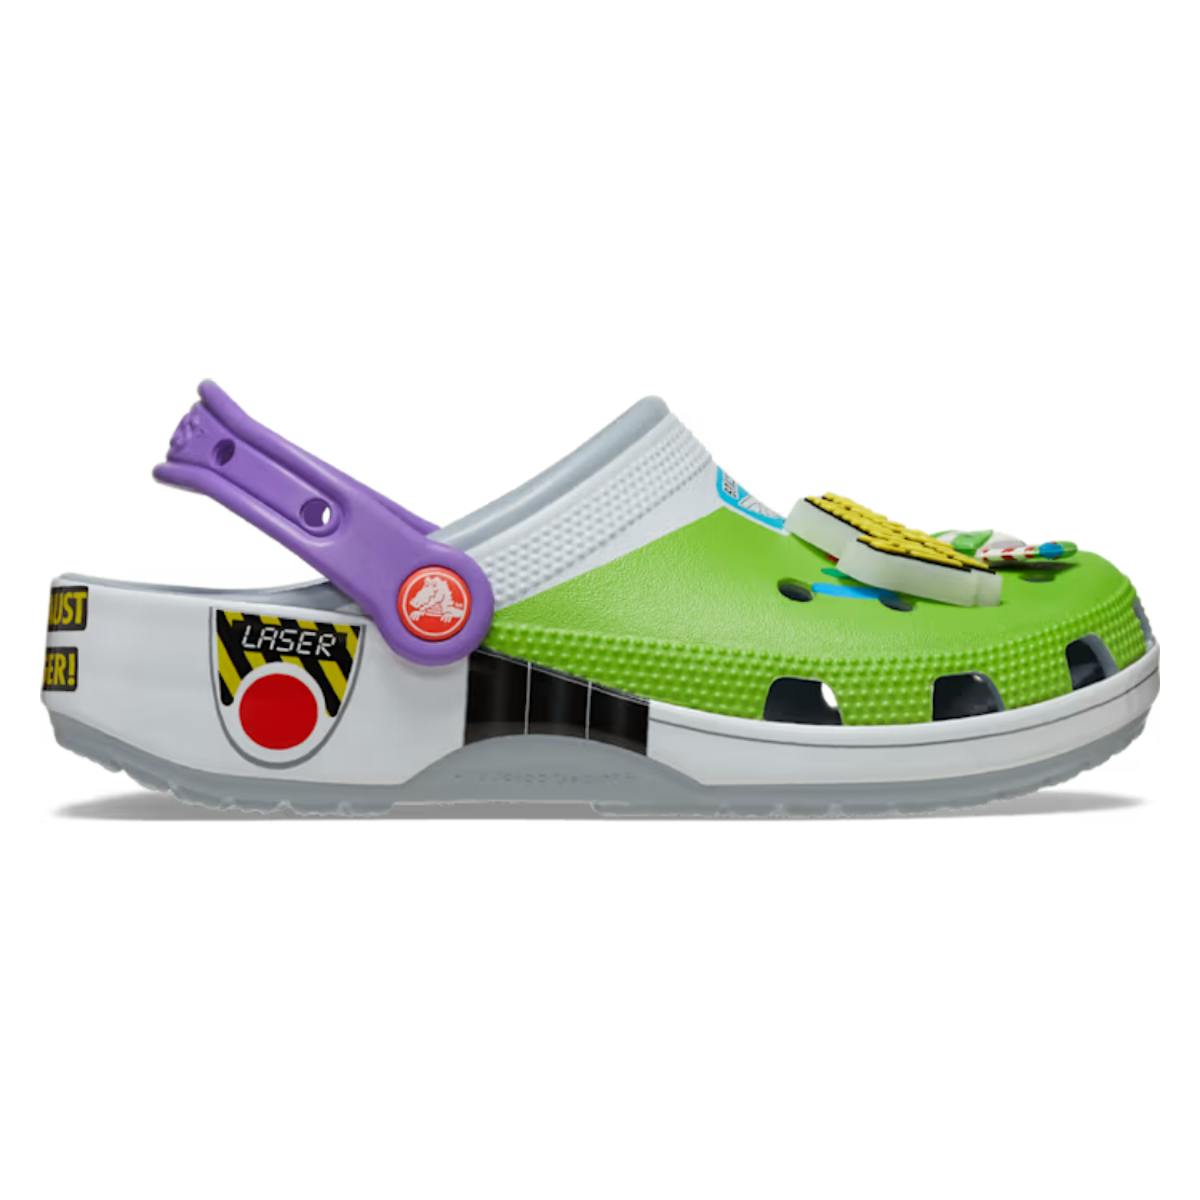 Toy Story x Crocs Classic Clog "Buzz Lightyear"